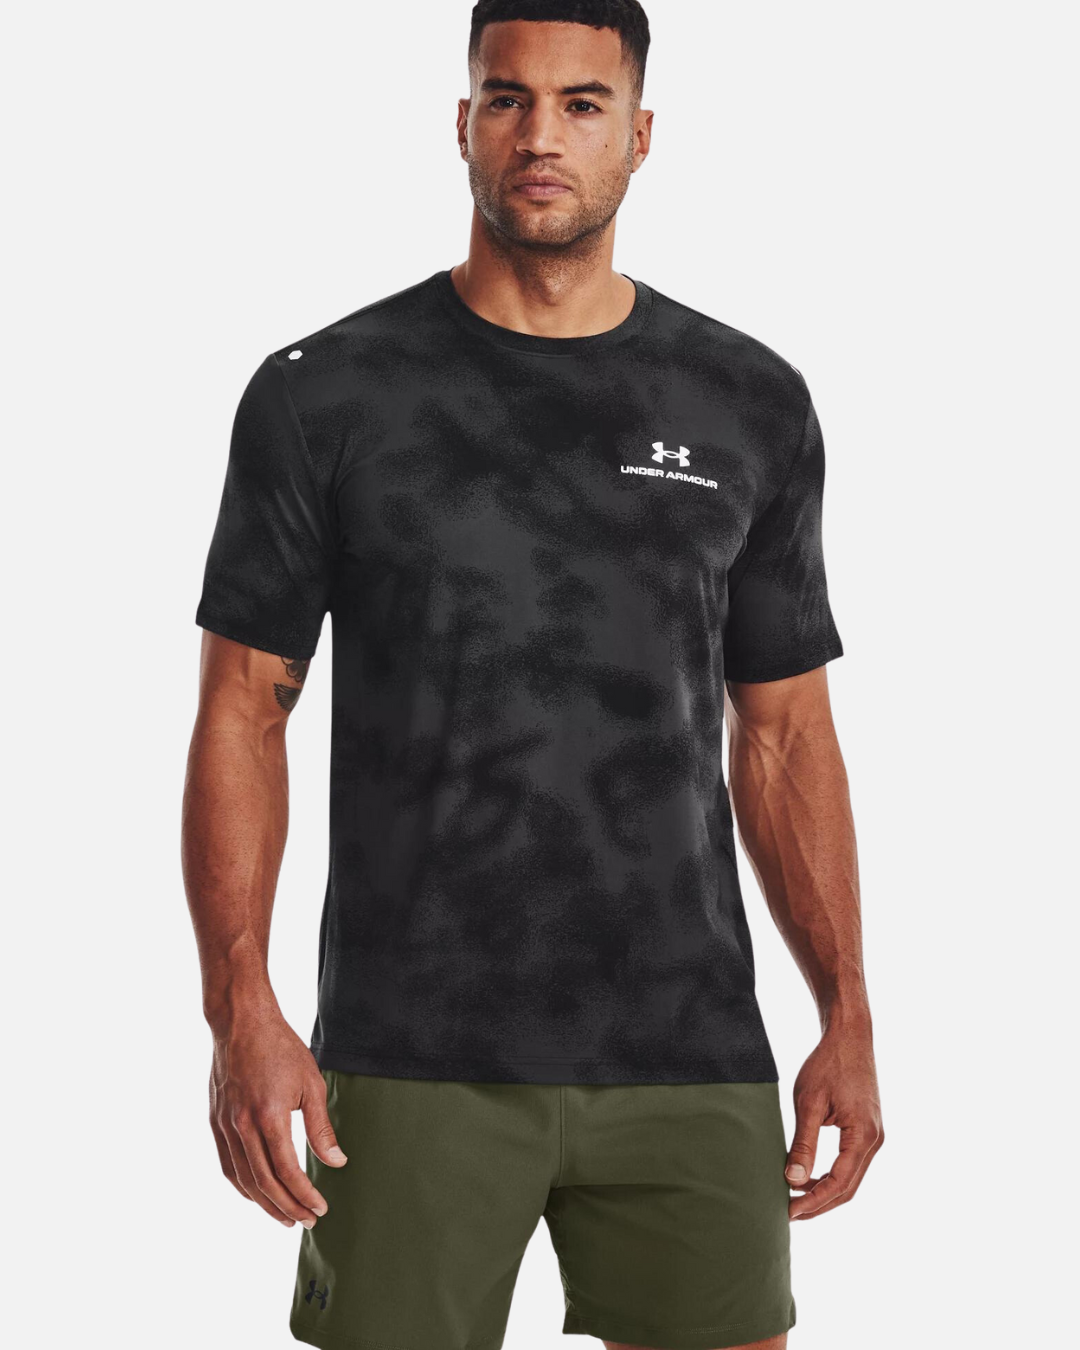 Under Armor RUSH™ Energy Print T-shirt - Black/Grey